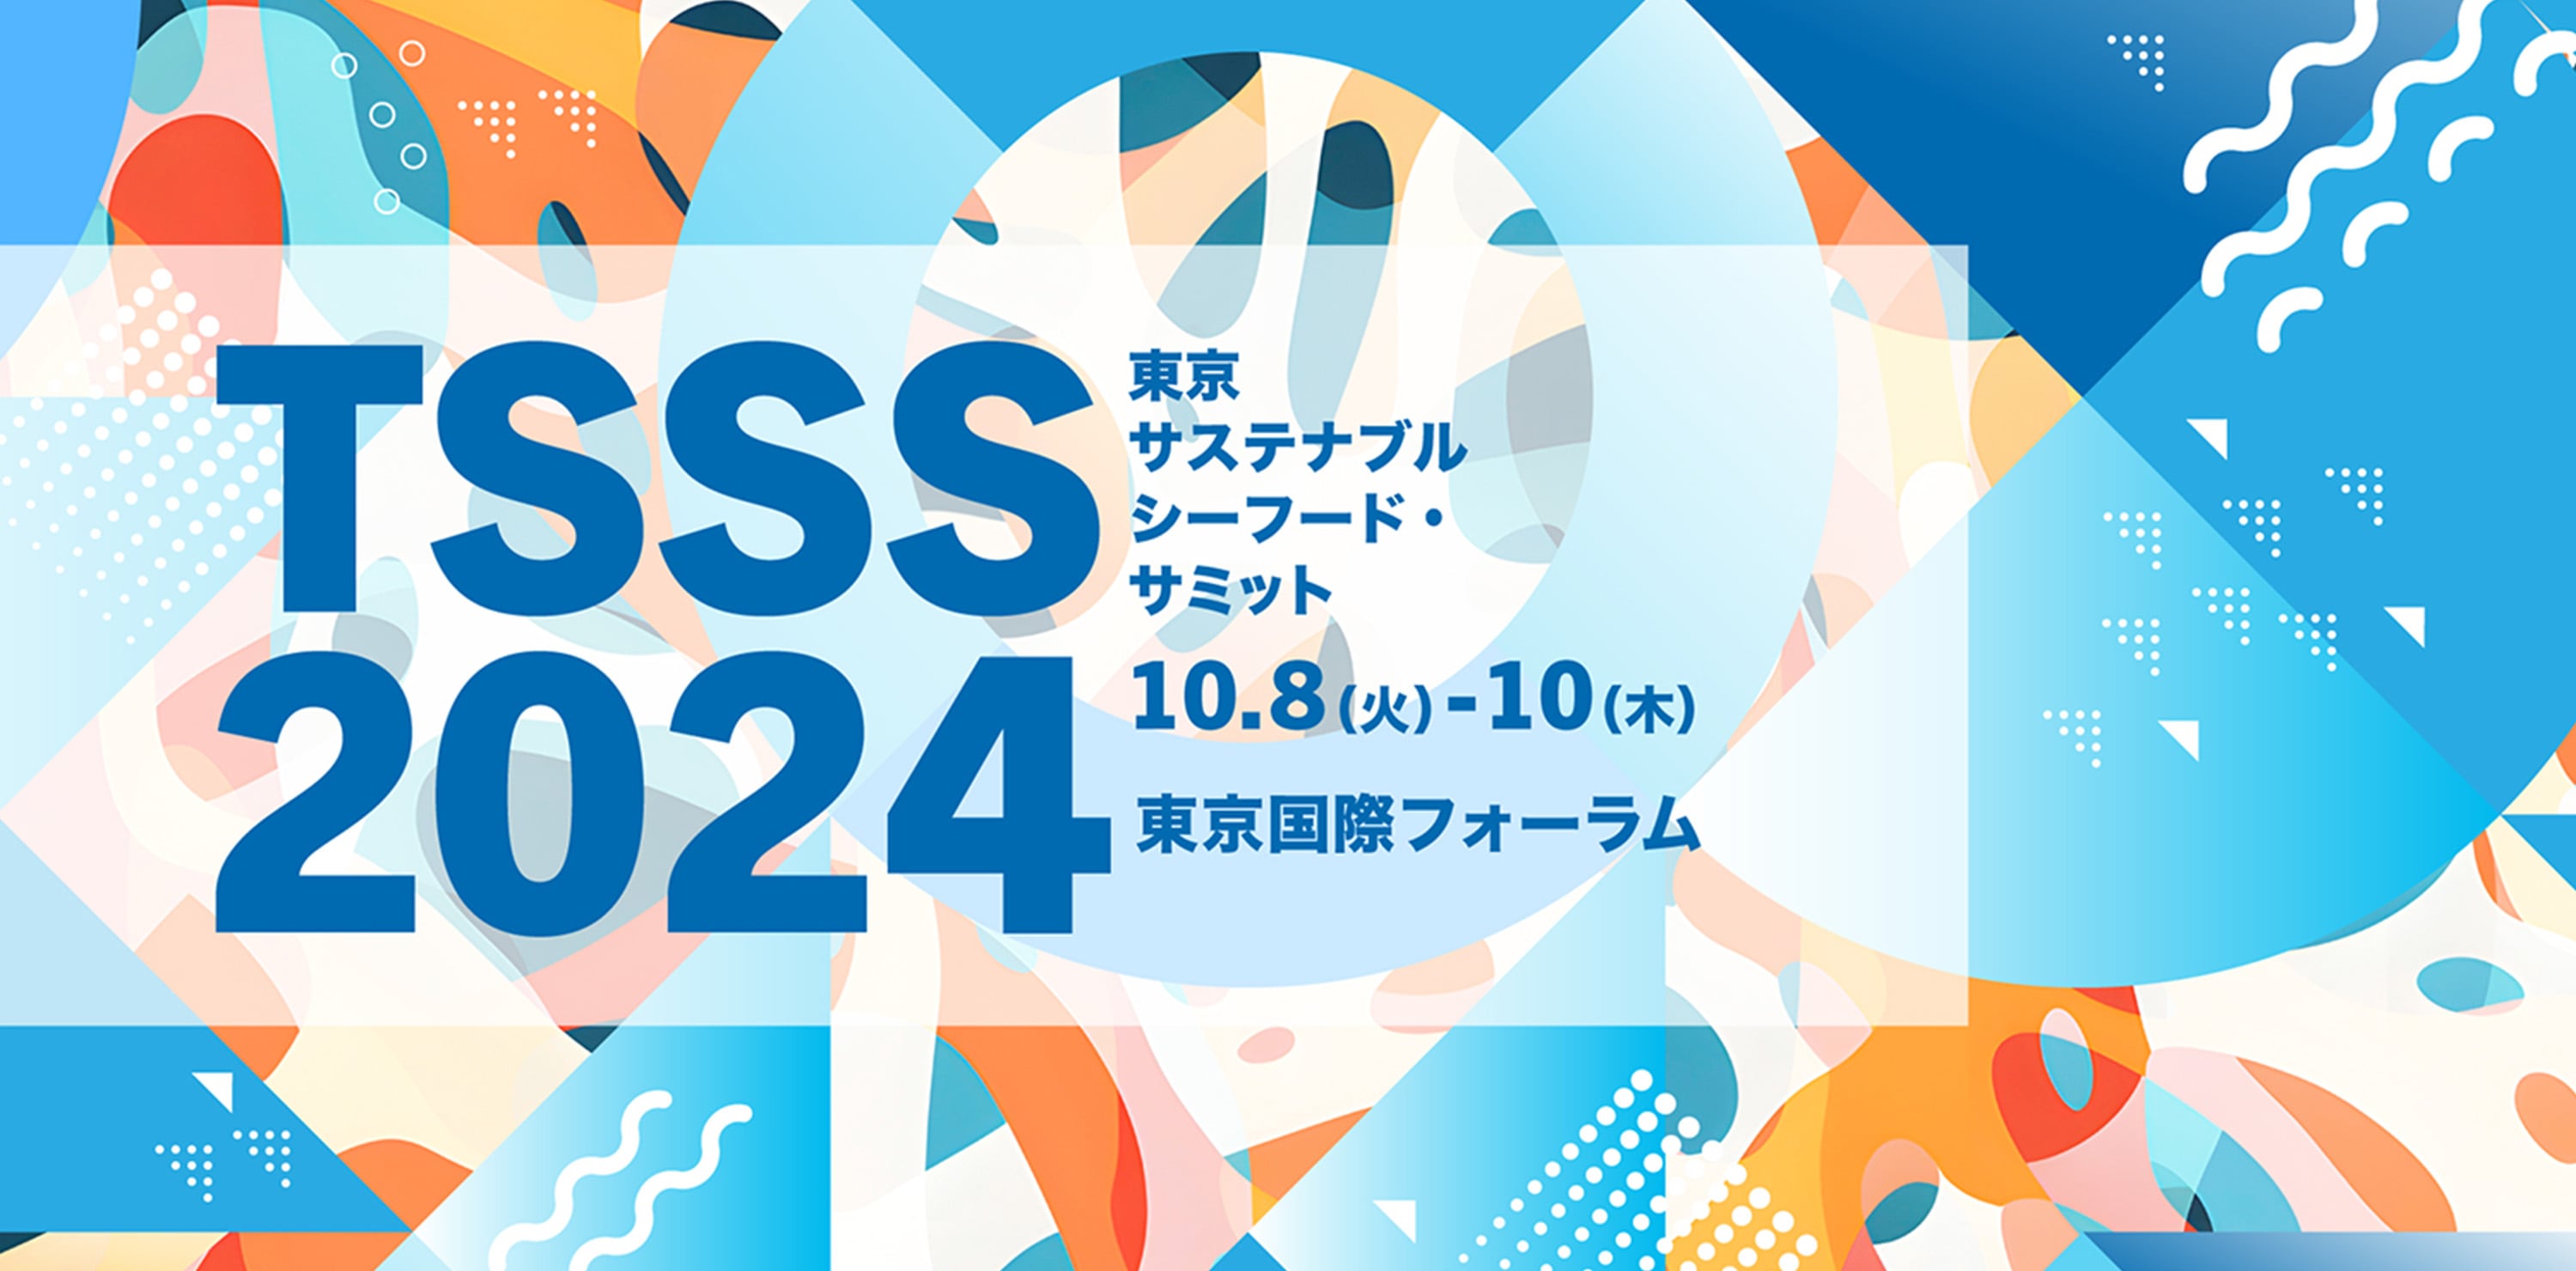 TSSS2024 東京サステナブルシーフード・サミット 10.8（火）-10（木）東京国際フォーラム